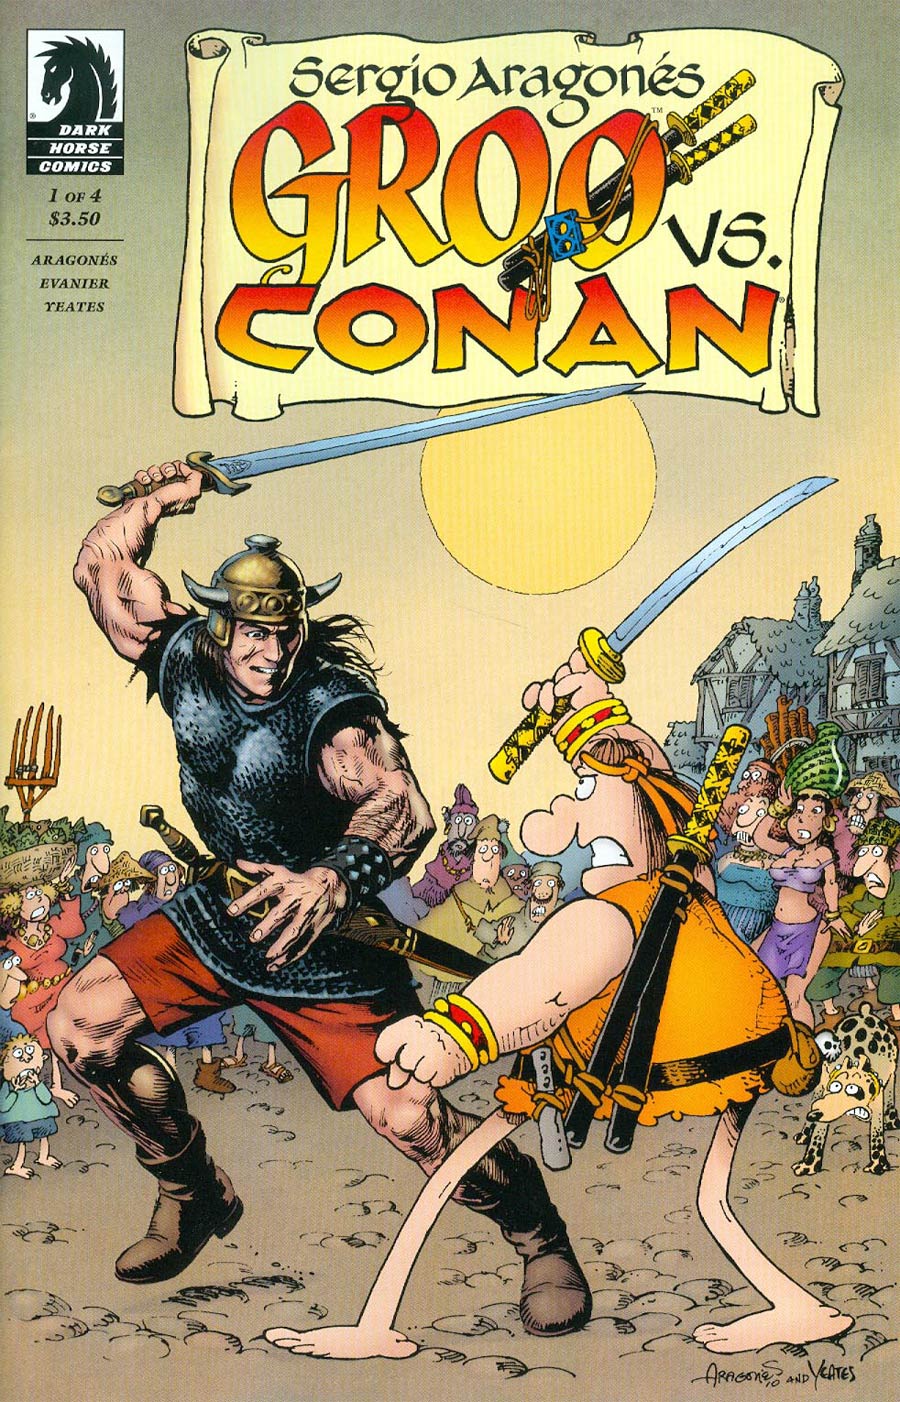 Groo vs Conan #1